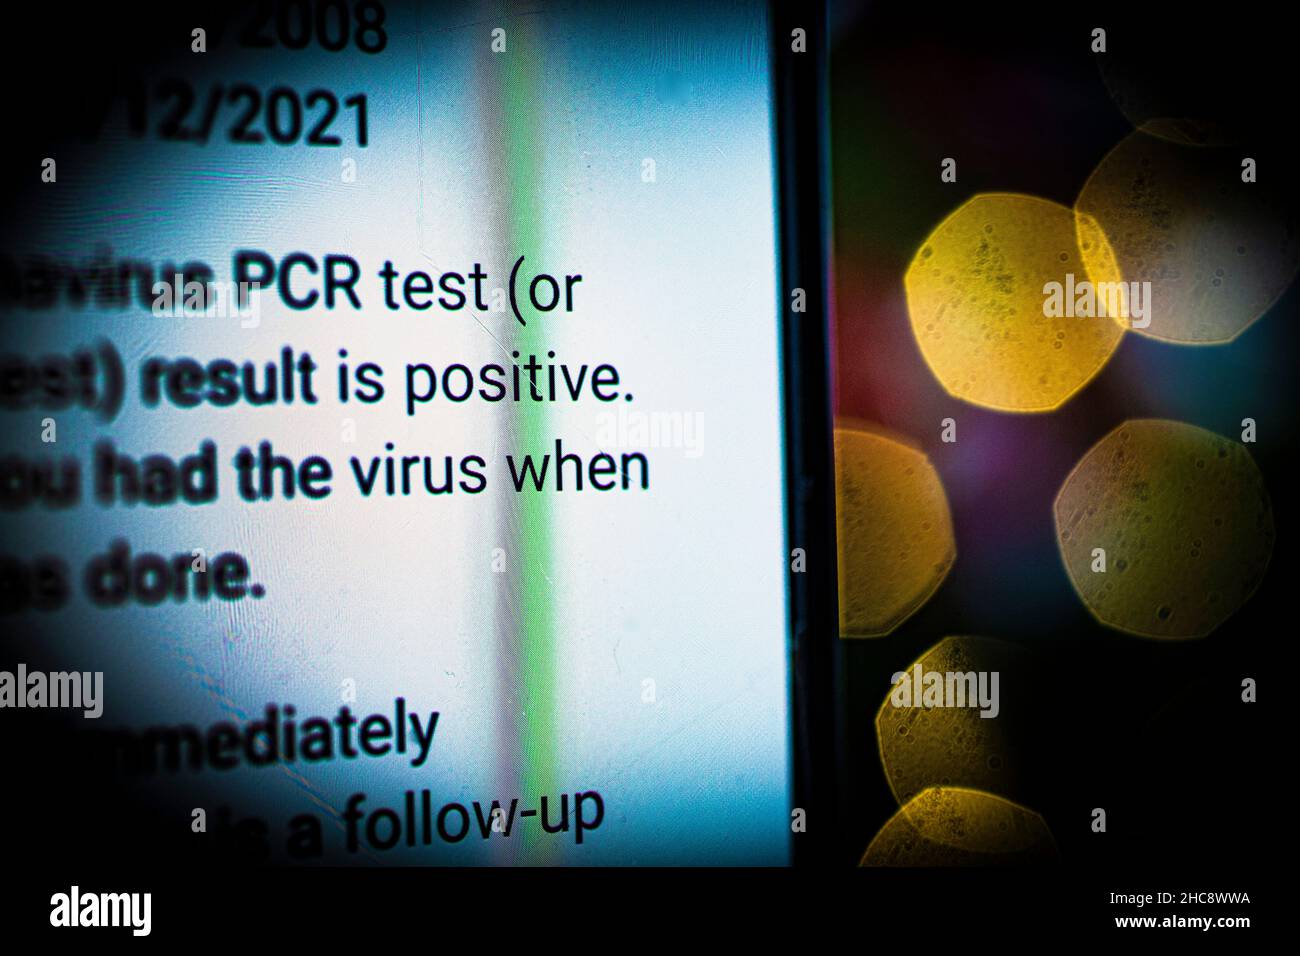 Nahaufnahme des Telefons mit positiver Meldung des NHS-Coronavirus-PCR-Tests Stockfoto